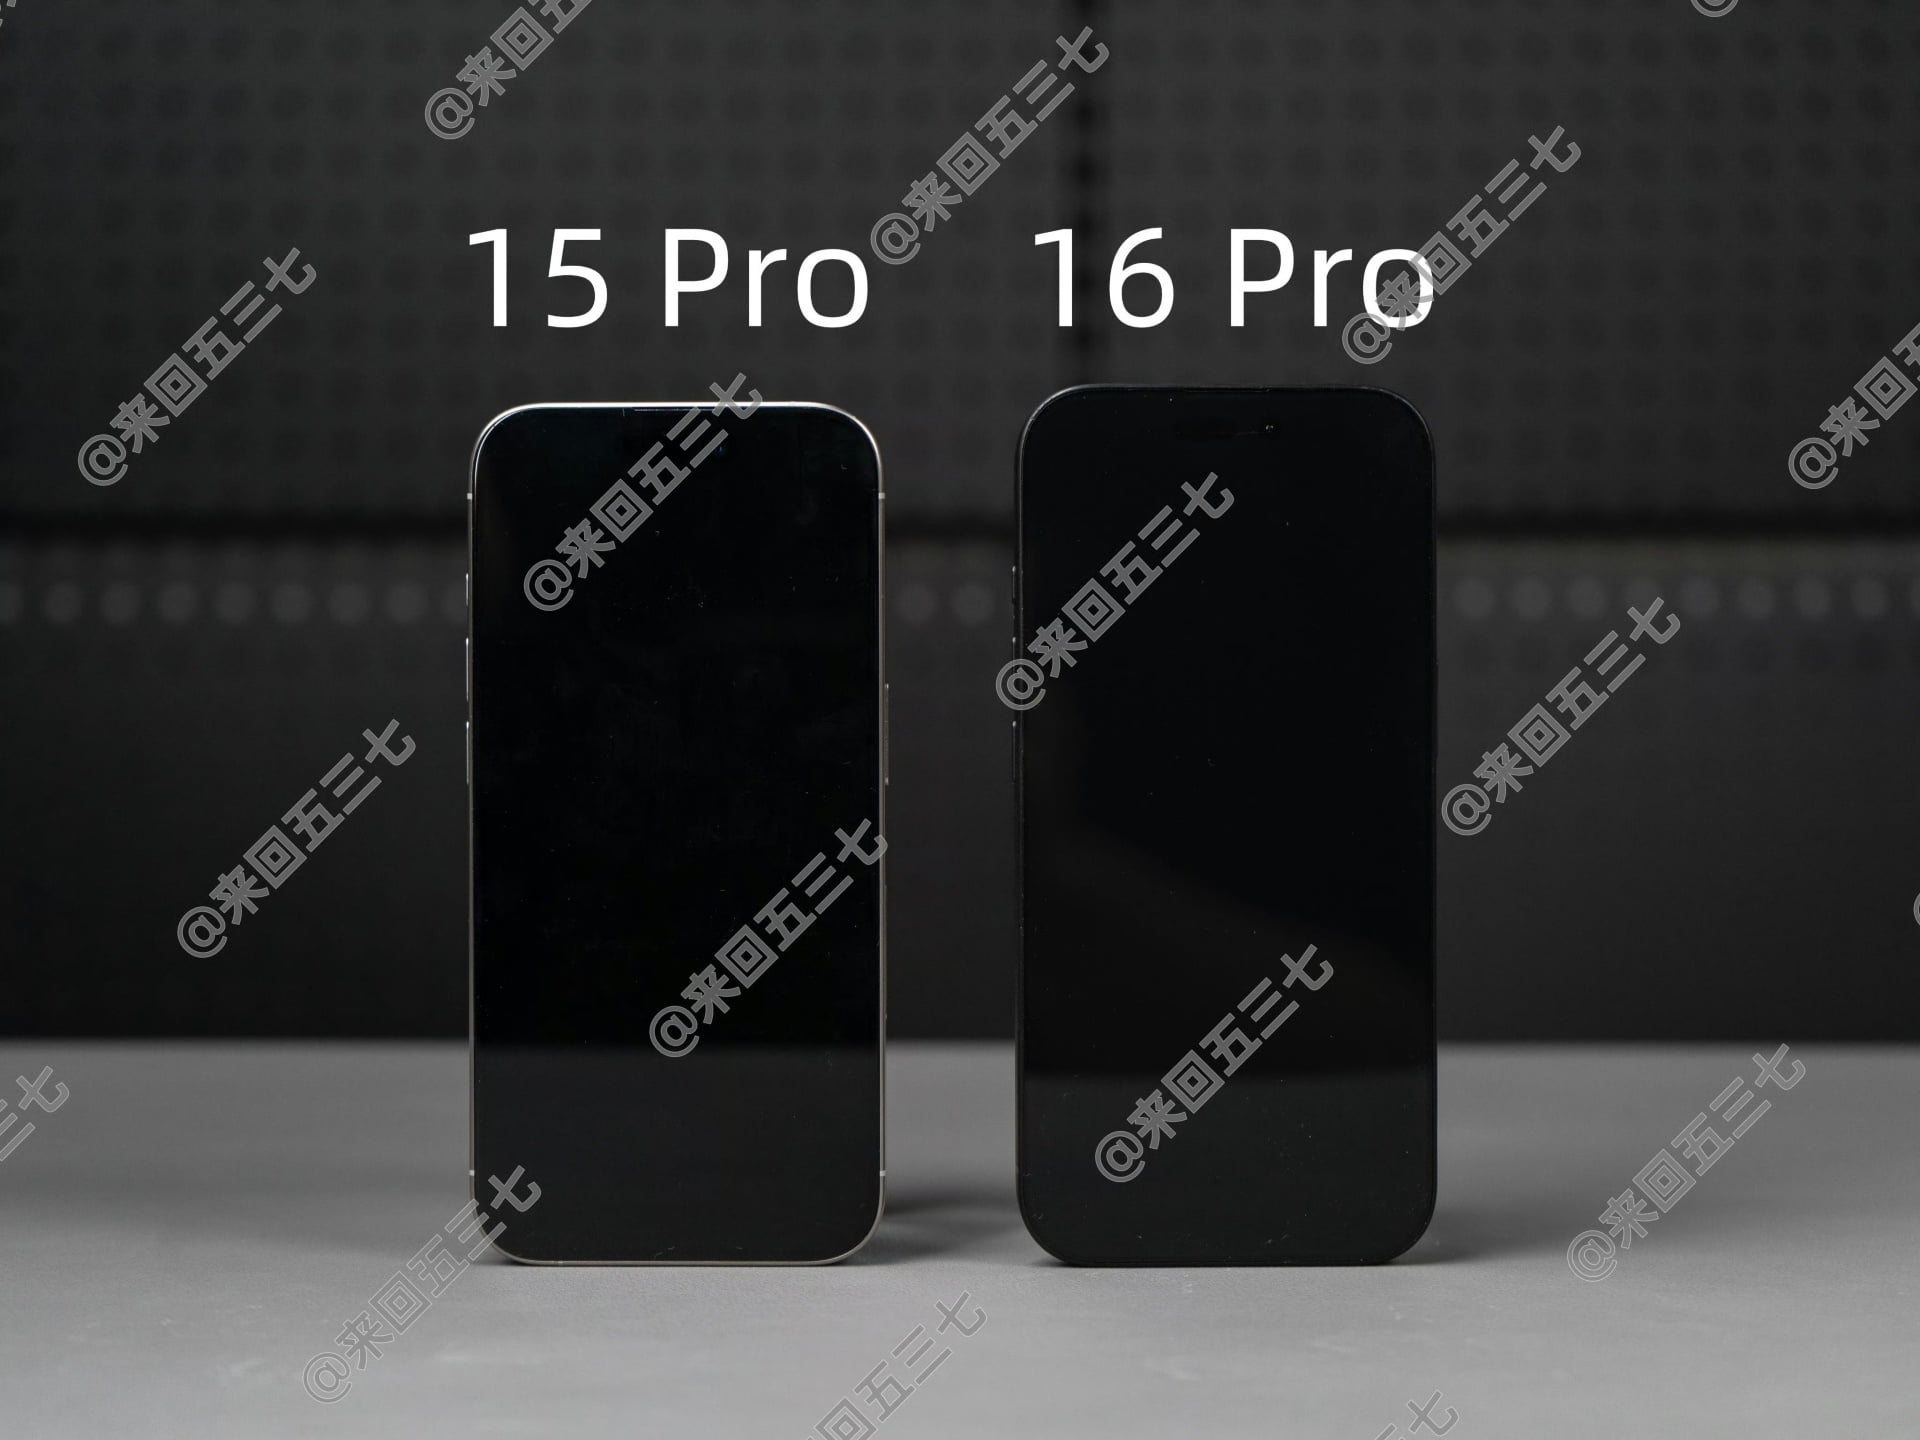 iPhone 16 Pro ve iPhone 15 Pro 3